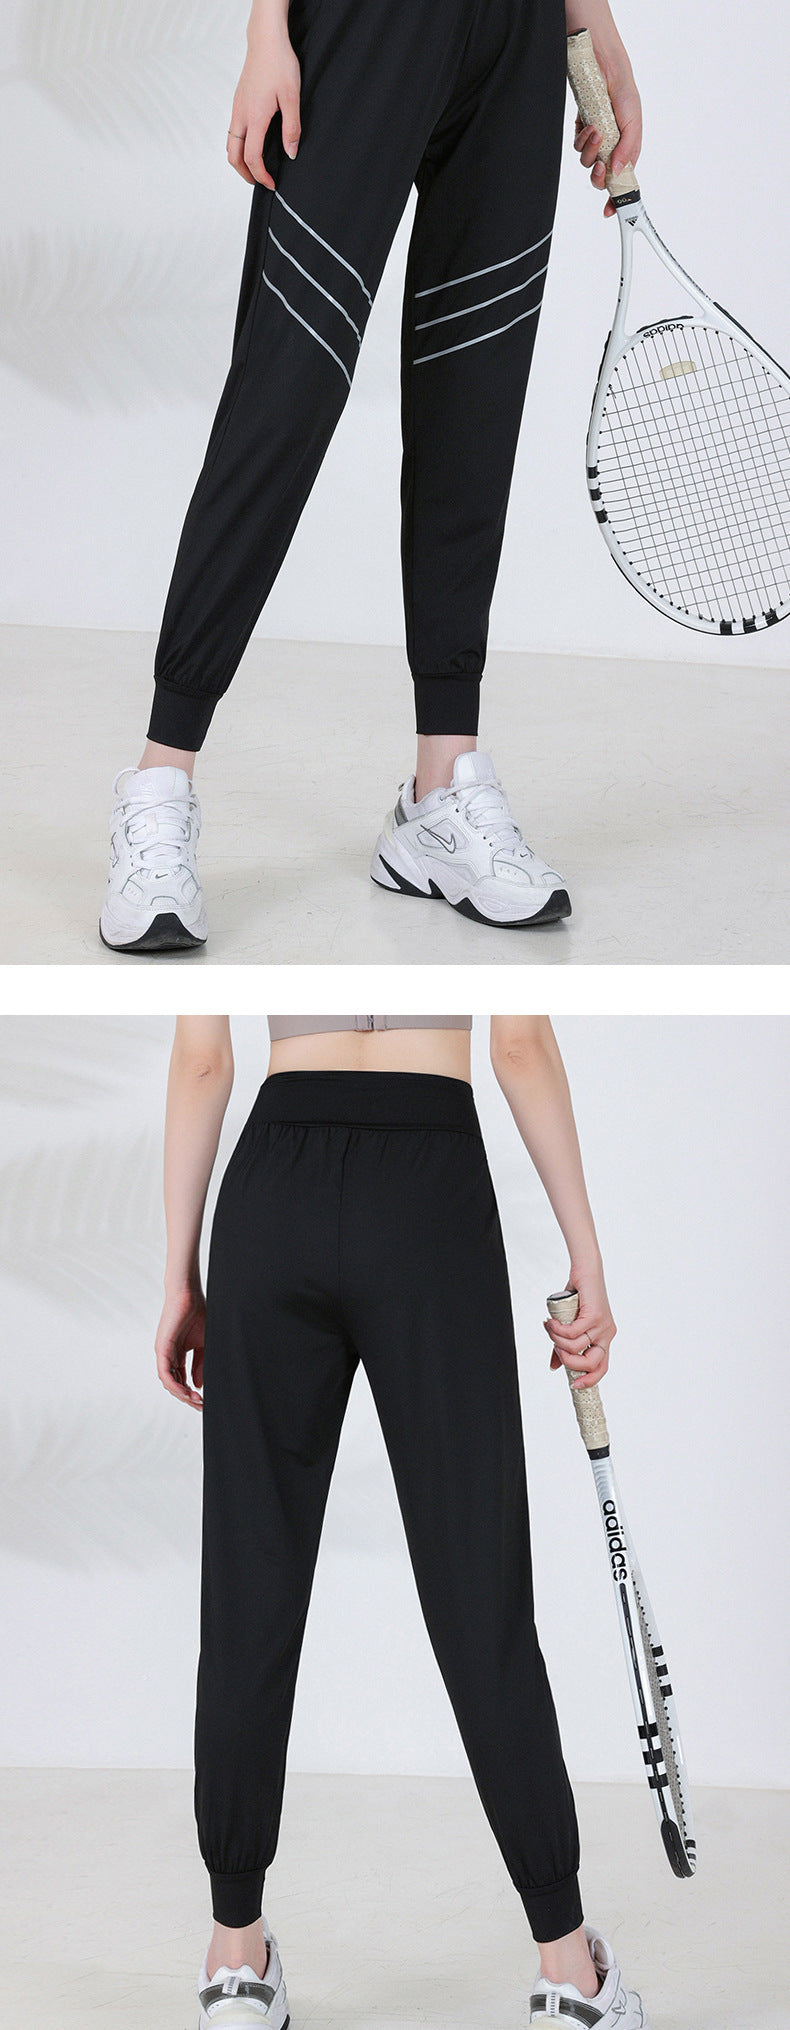 sports pants women's loose trousers quick-drying running fitness yoga pants thin section luminous harem pants